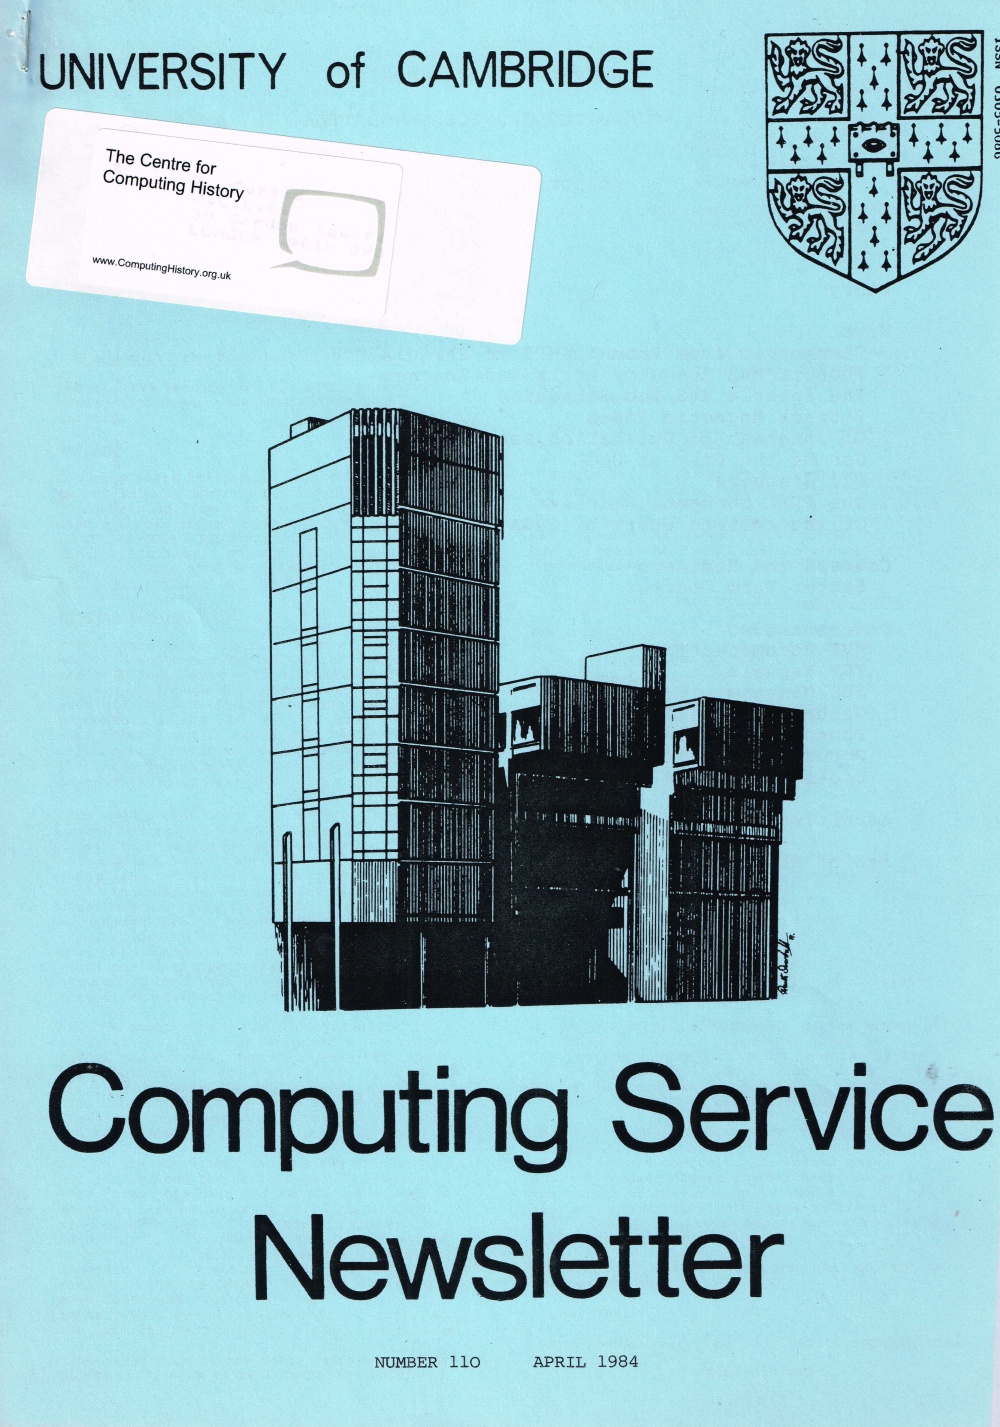 Article: University of Cambridge Computing Service April 1984 Newsletter 110